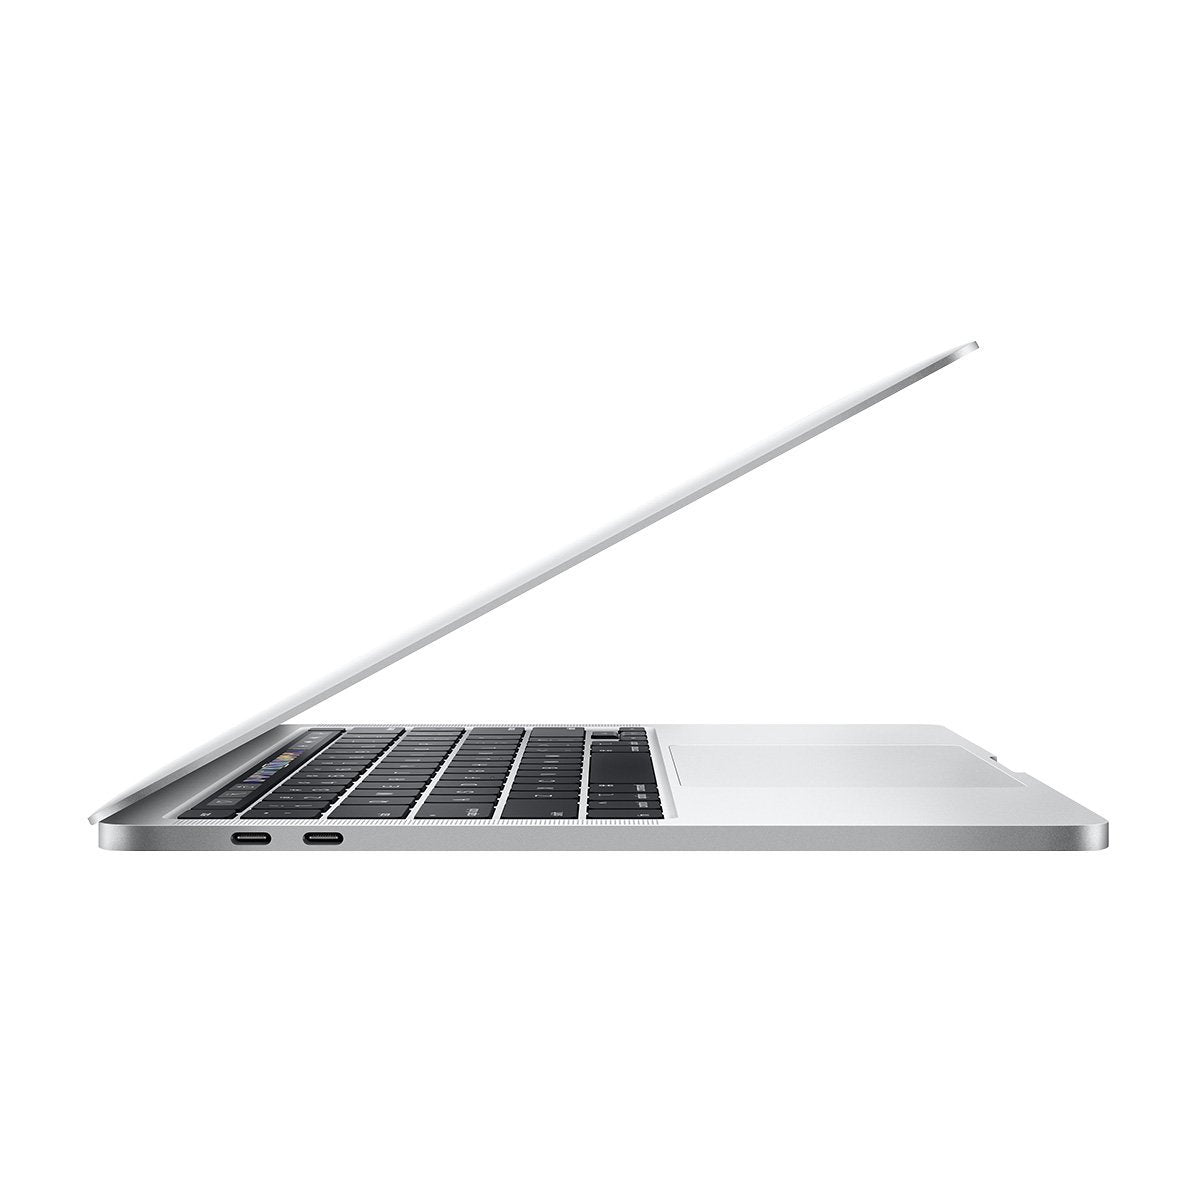 Macbook Pro 13-inch (Touchbar) - 2017 - Core i5 - Silver